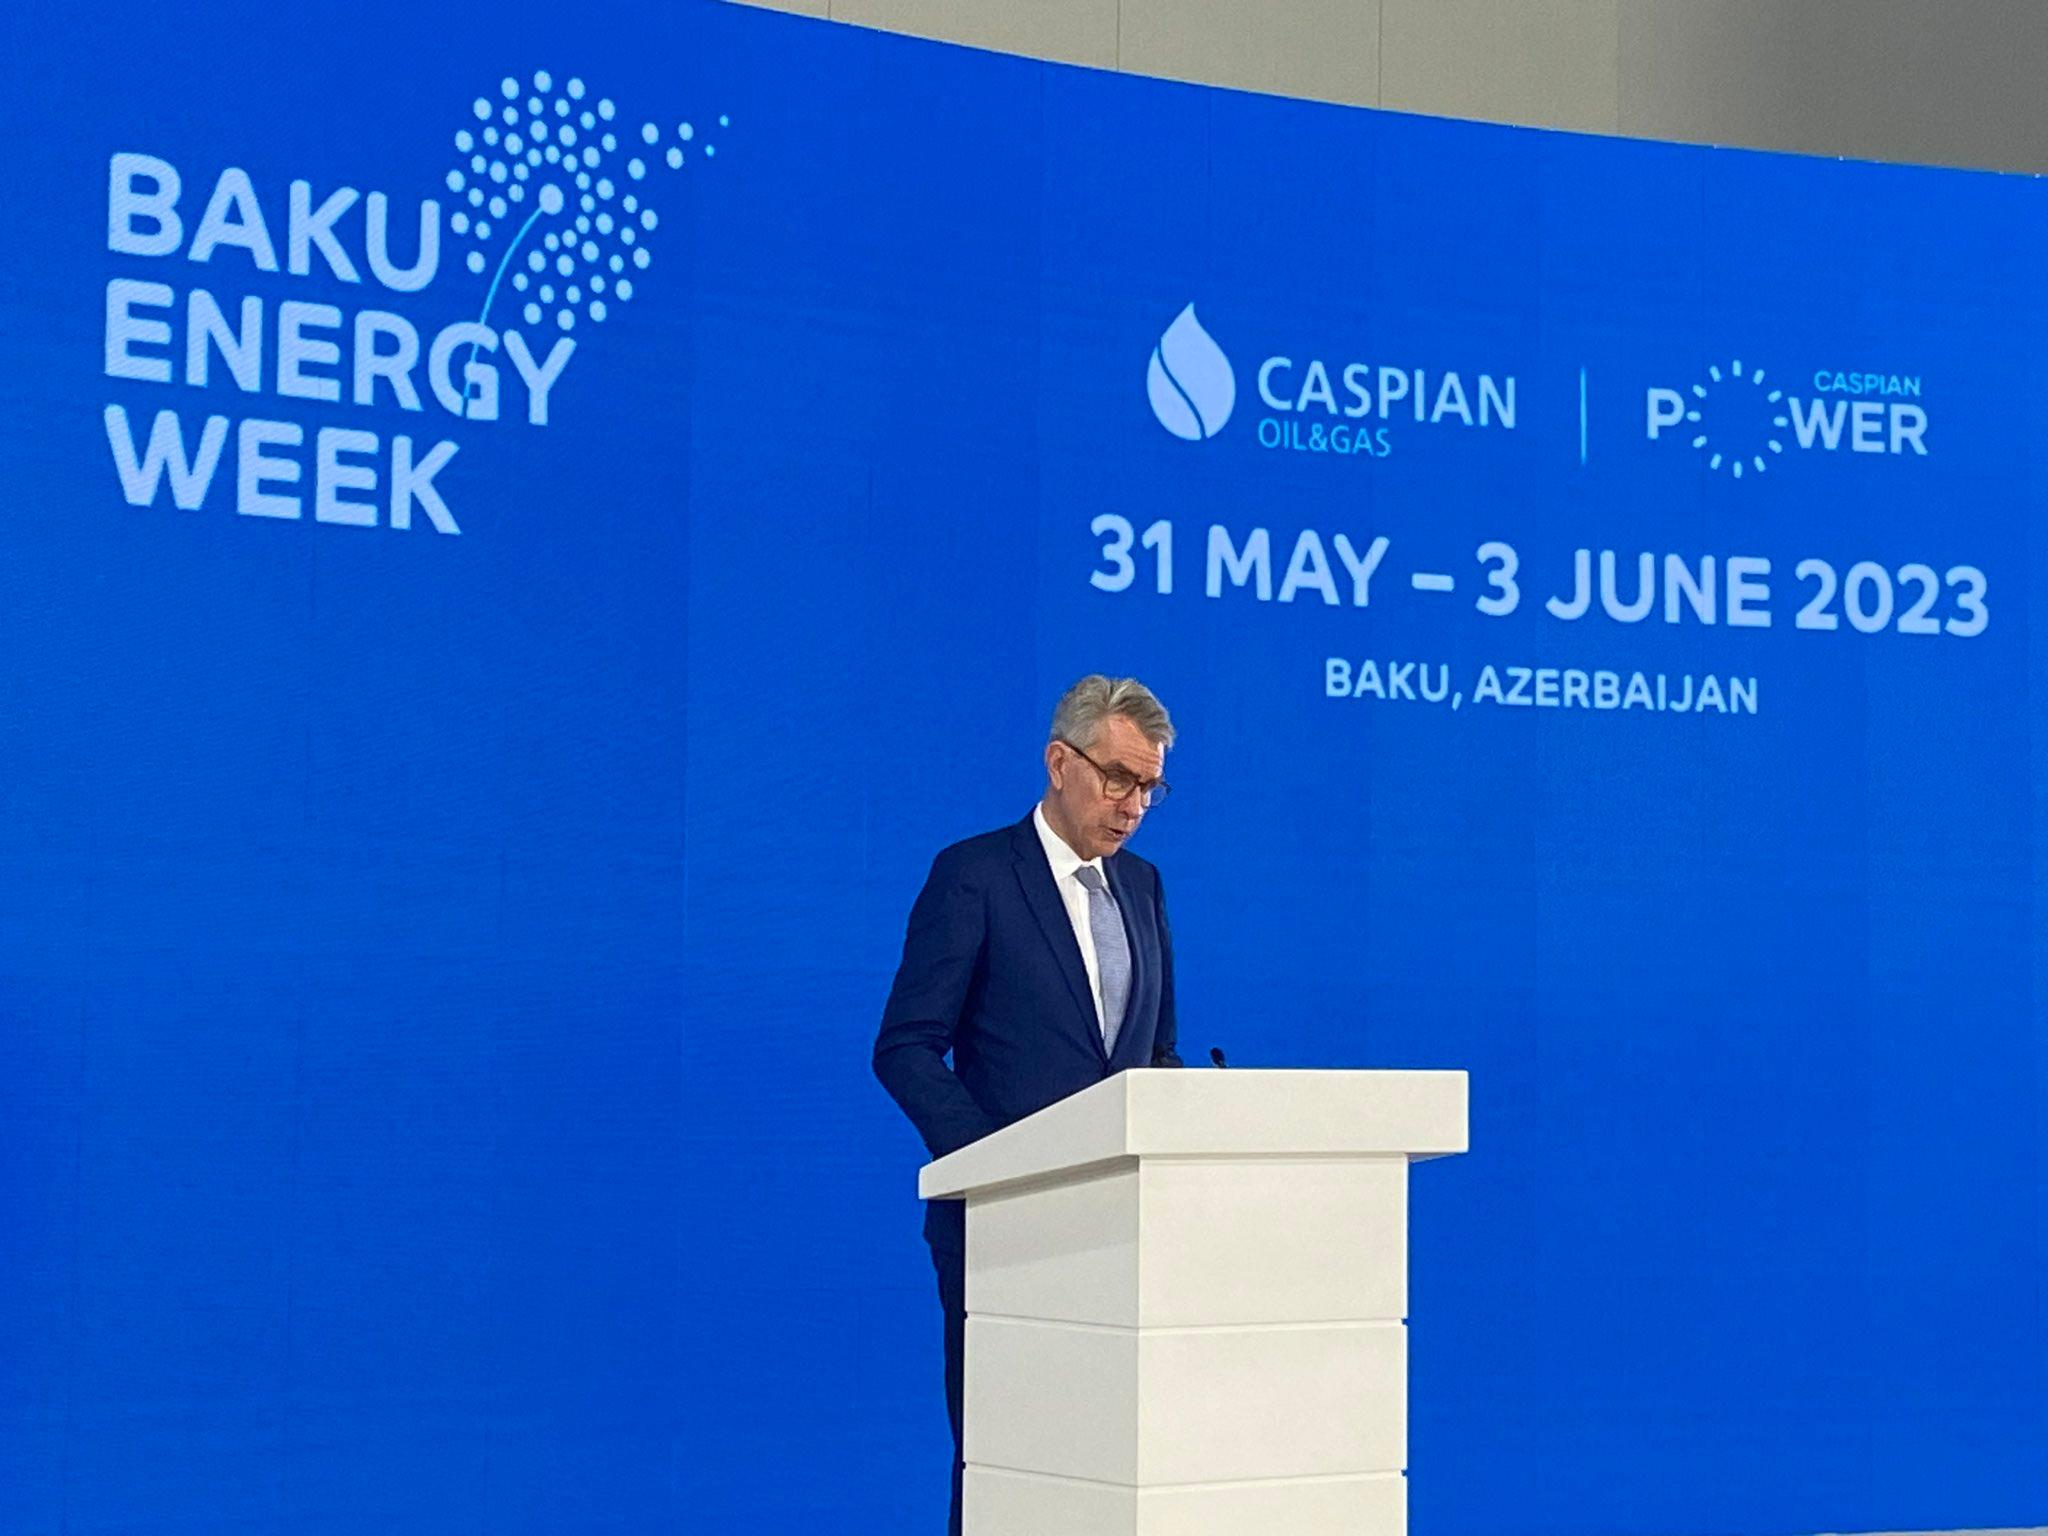 Assistant Secretary Pyatt’s Visit to Baku Highlights Azerbaijan’s Increasing Role in Energy Security